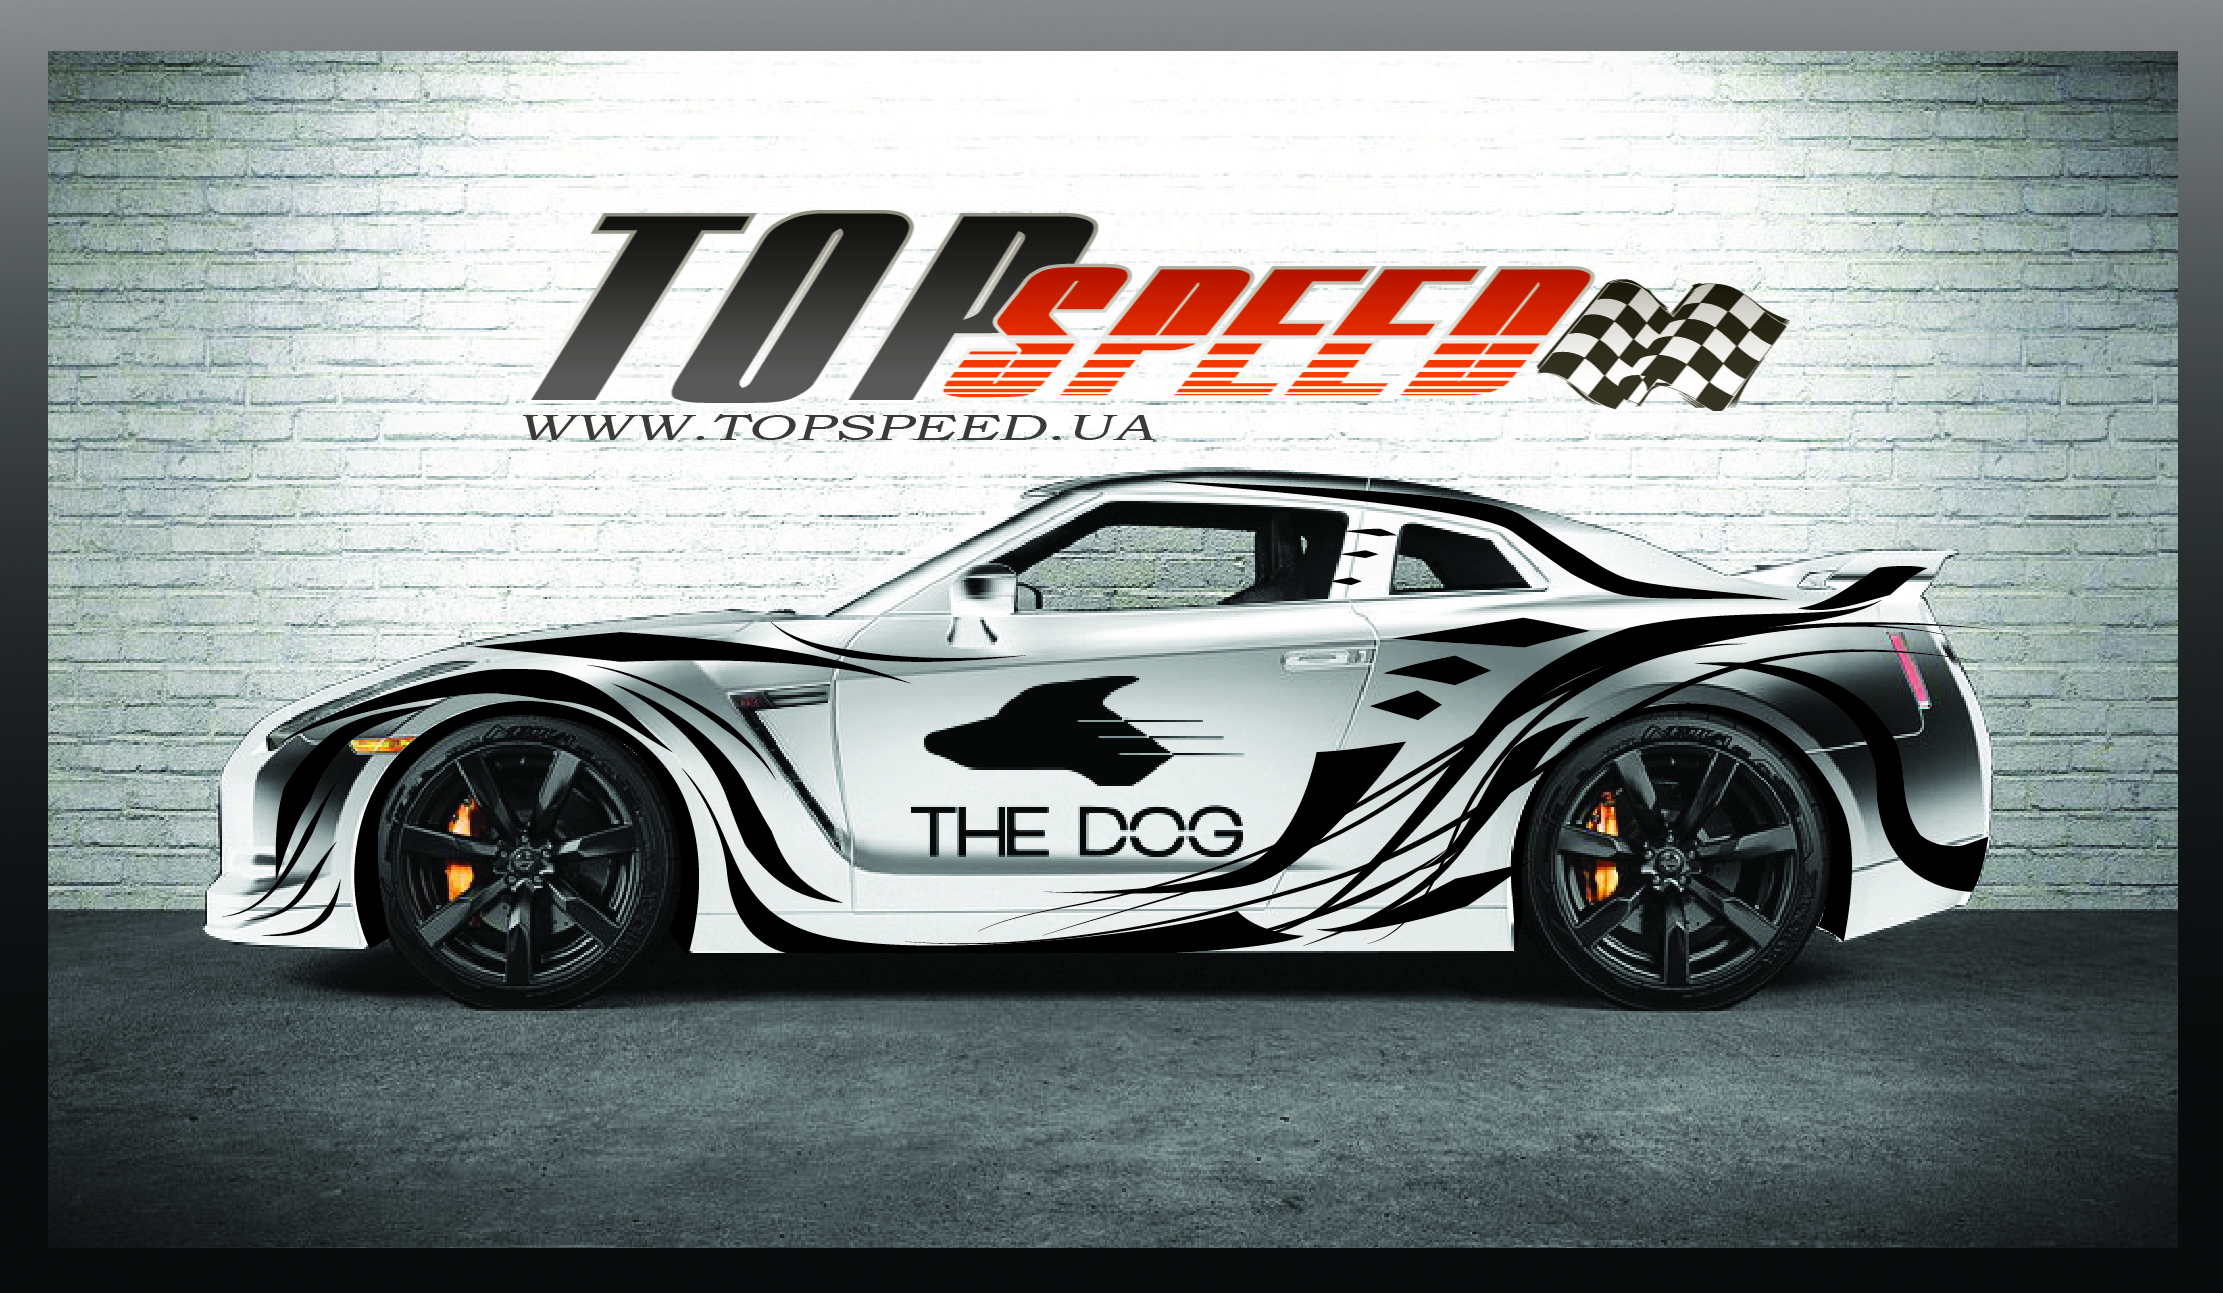 Top Speed GTR The Dog